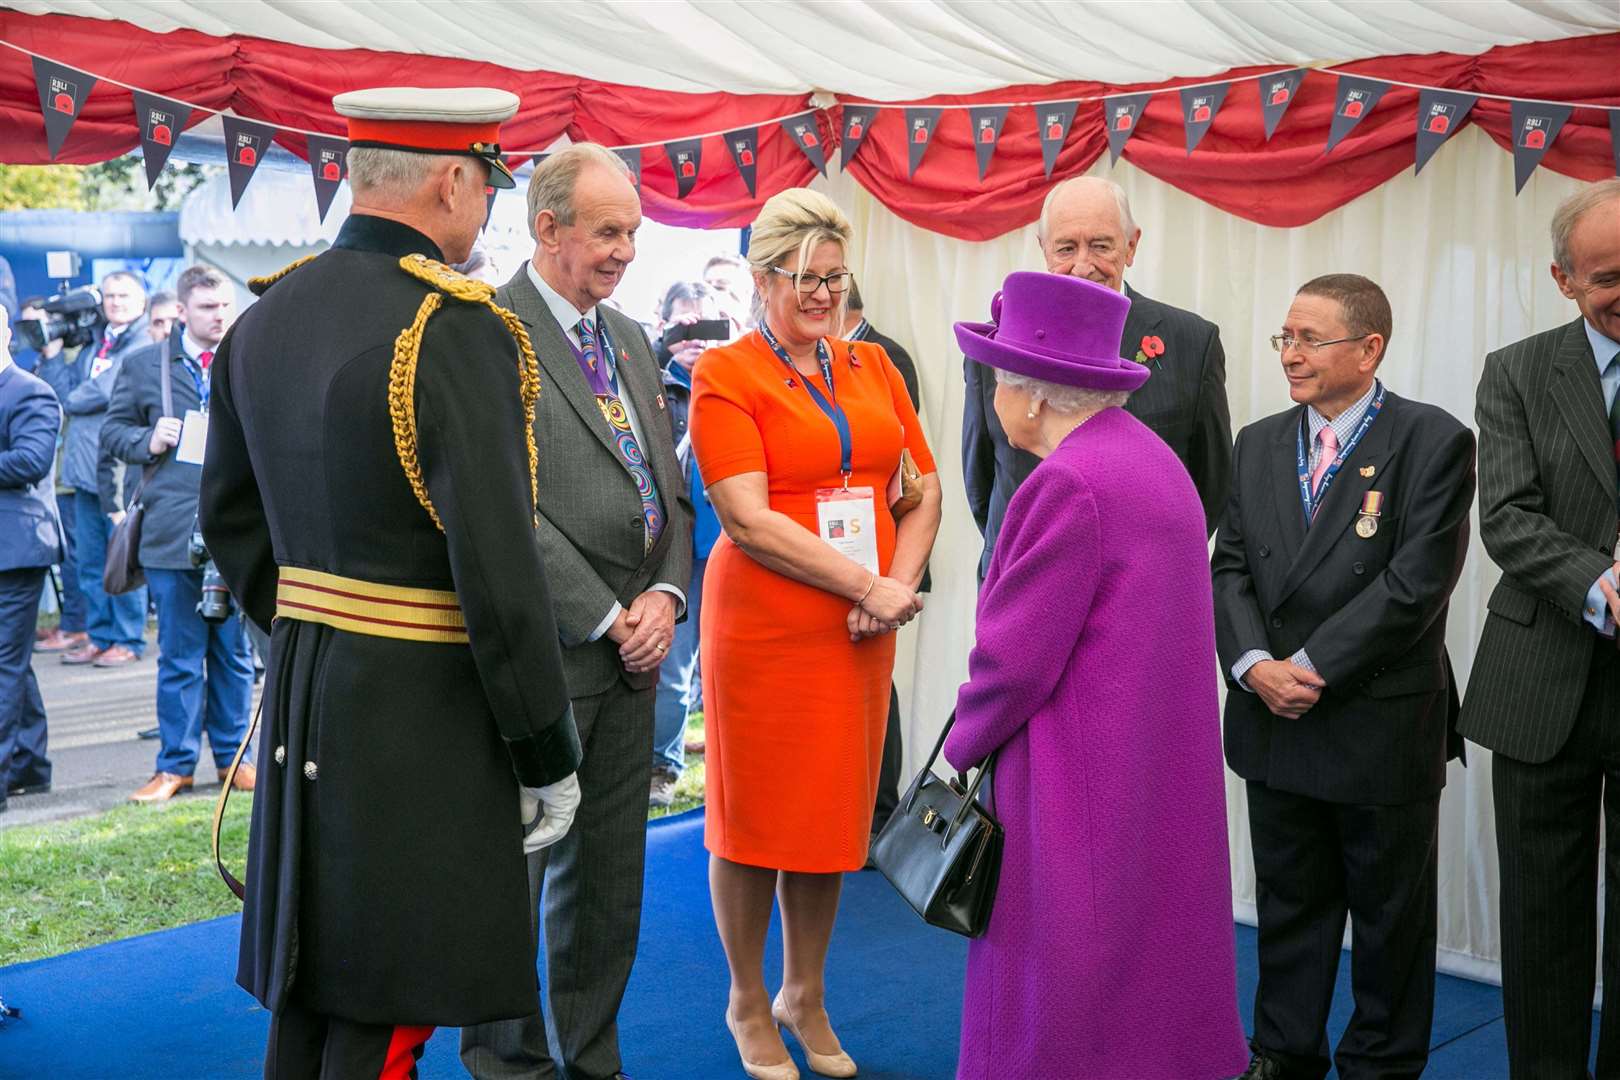 Michael Head meets the Queen at a Royal British Legion event